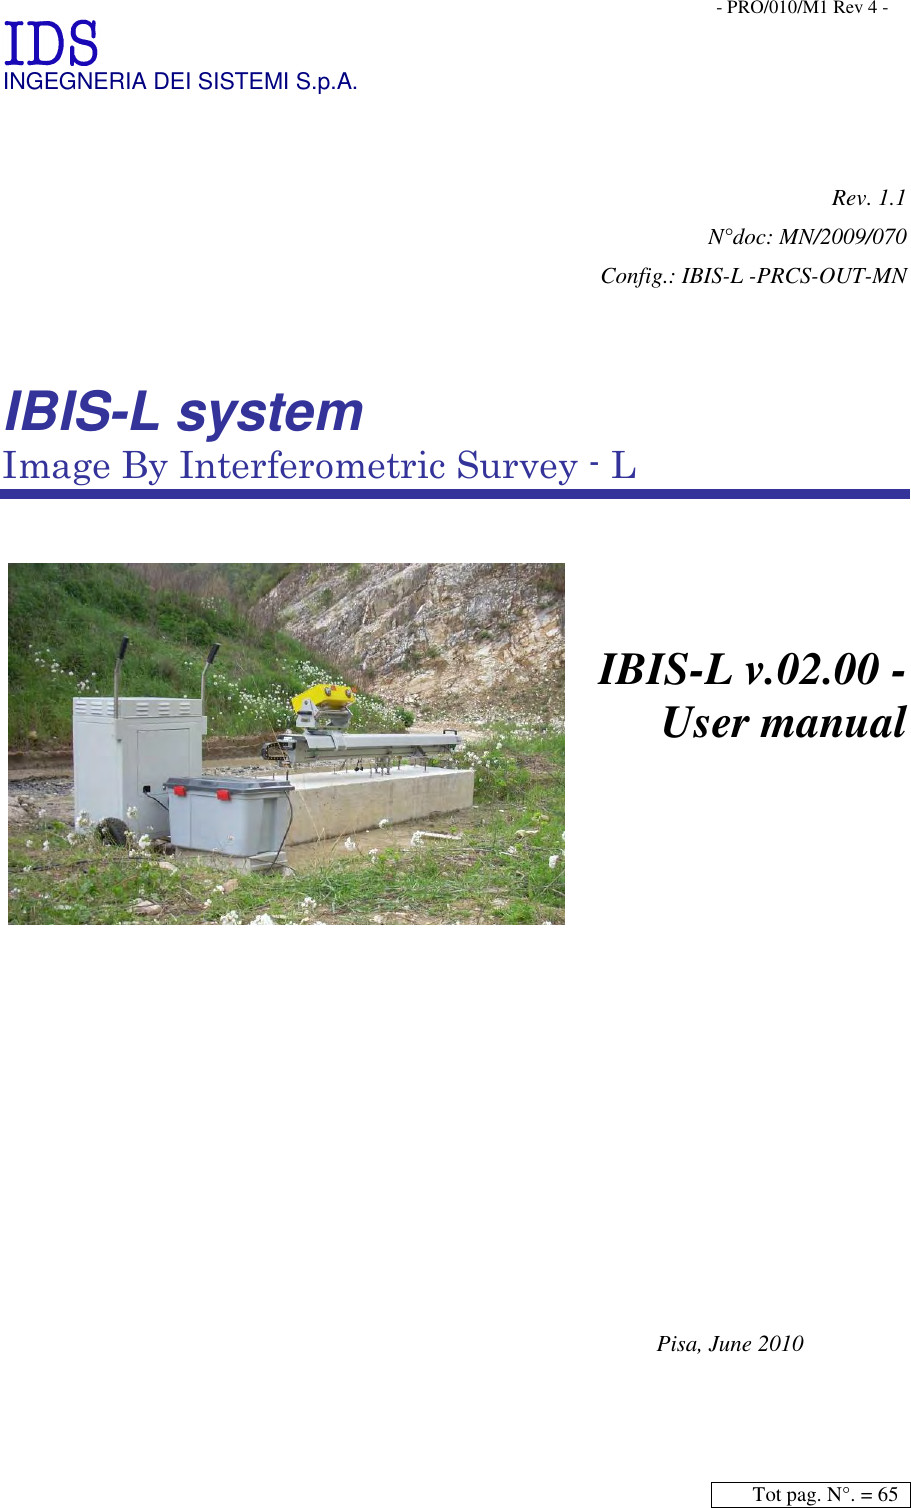 Tot pag. N°. = 65    - PRO/010/M1 Rev 4 -  INGEGNERIA DEI SISTEMI S.p.A.   Rev. 1.1  N°doc: MN/2009/070 Config.: IBIS-L -PRCS-OUT-MN   IBIS-L system Image By Interferometric Survey - L                                              Pisa, June 2010  IBIS-L v.02.00 - User manual 